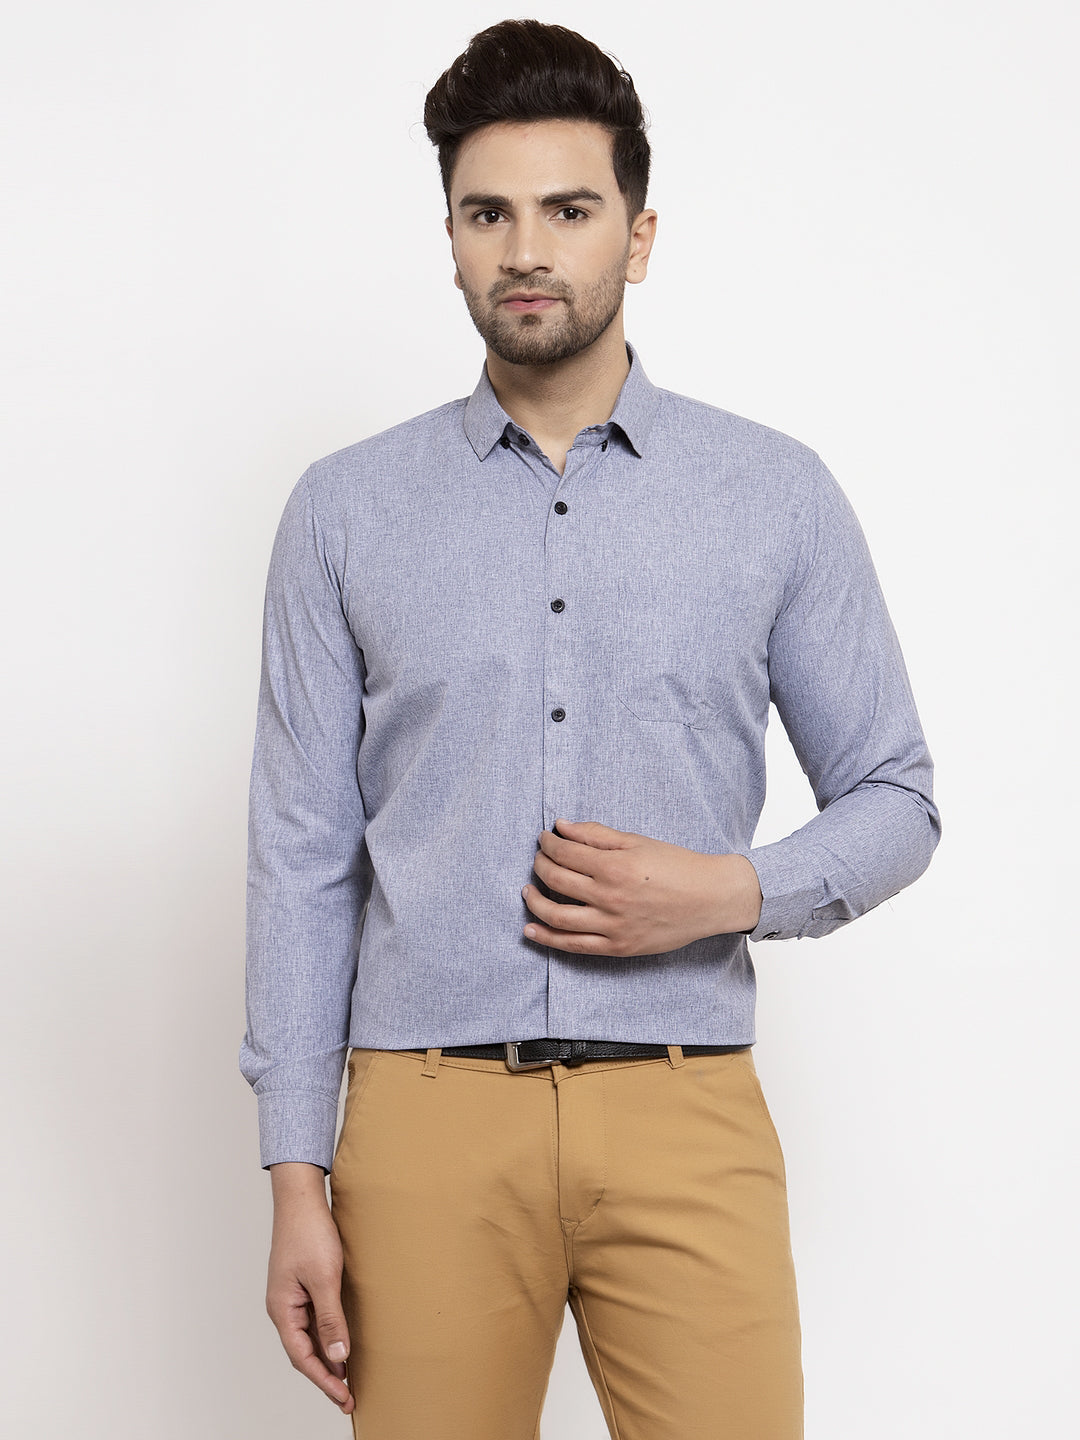 Men's Grey Cotton Solid Button Down Formal Shirts ( SF 734Light-Grey ) - Jainish